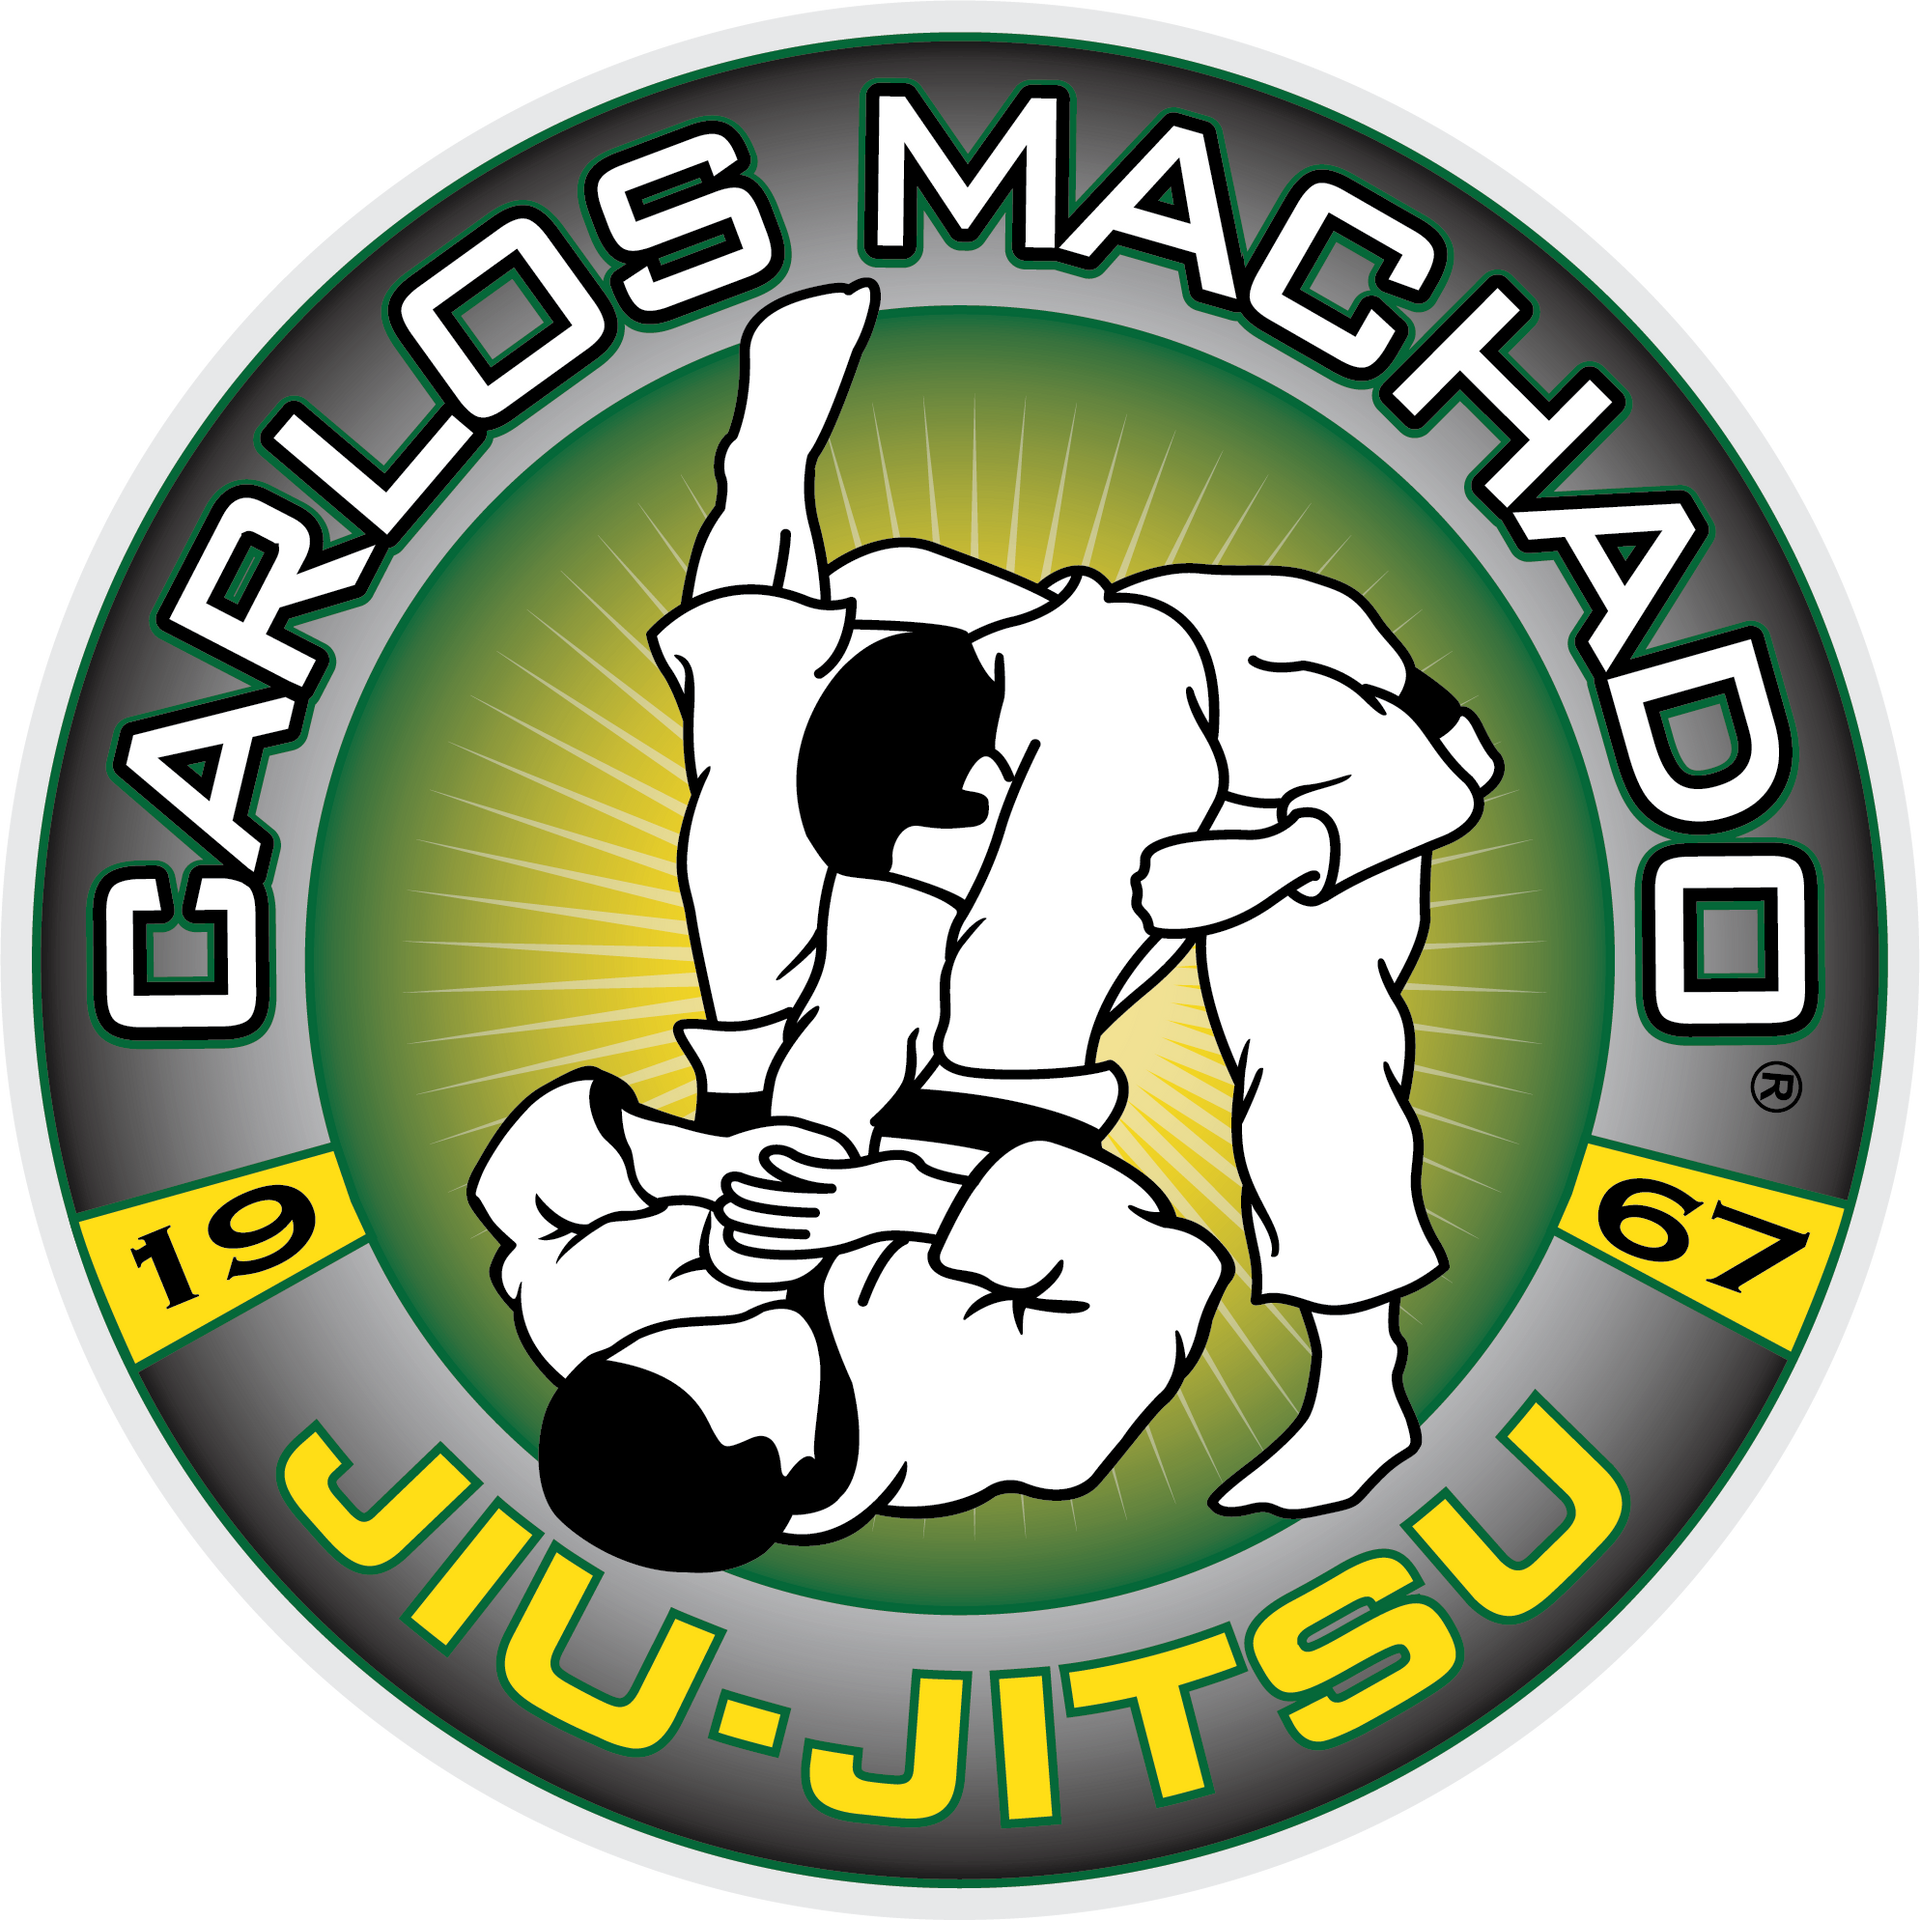 A logo for carlos machado jiu-jitsu shows two men wrestling